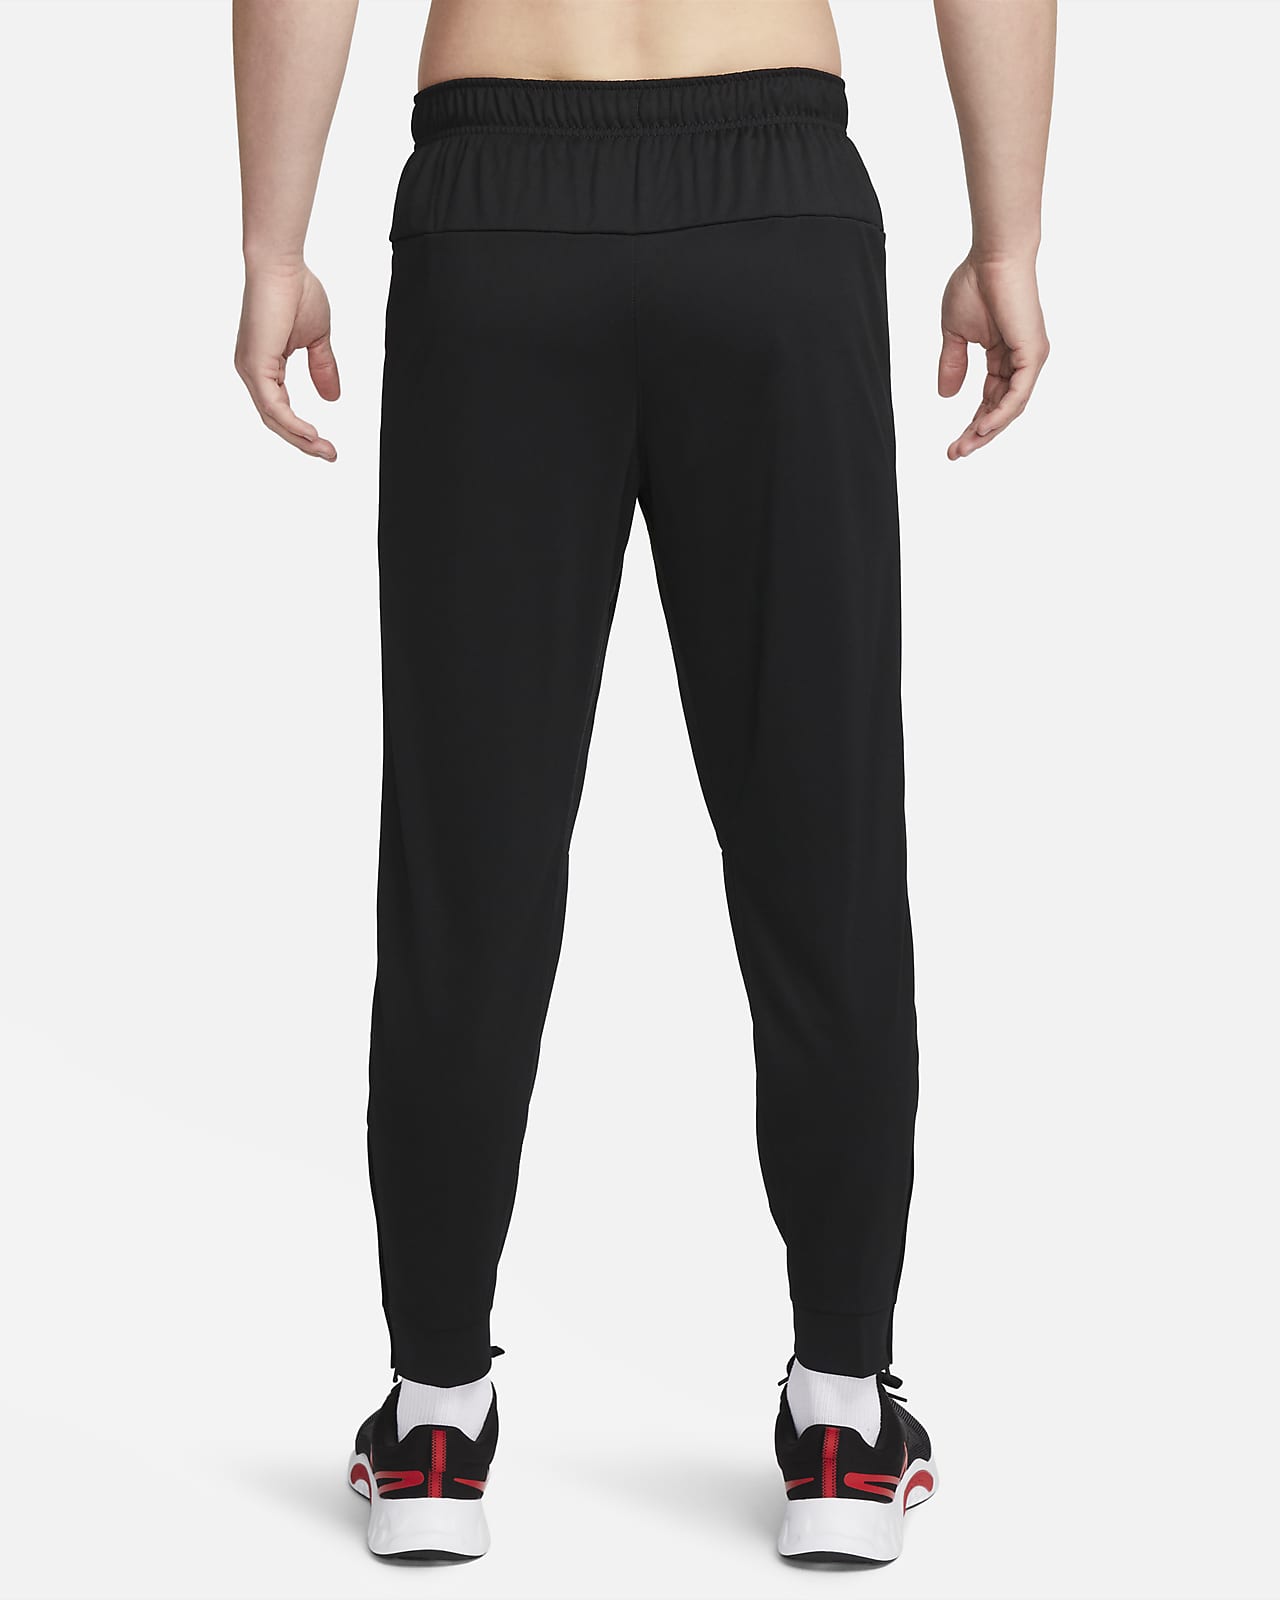 Nike Tapered Jogger Pants